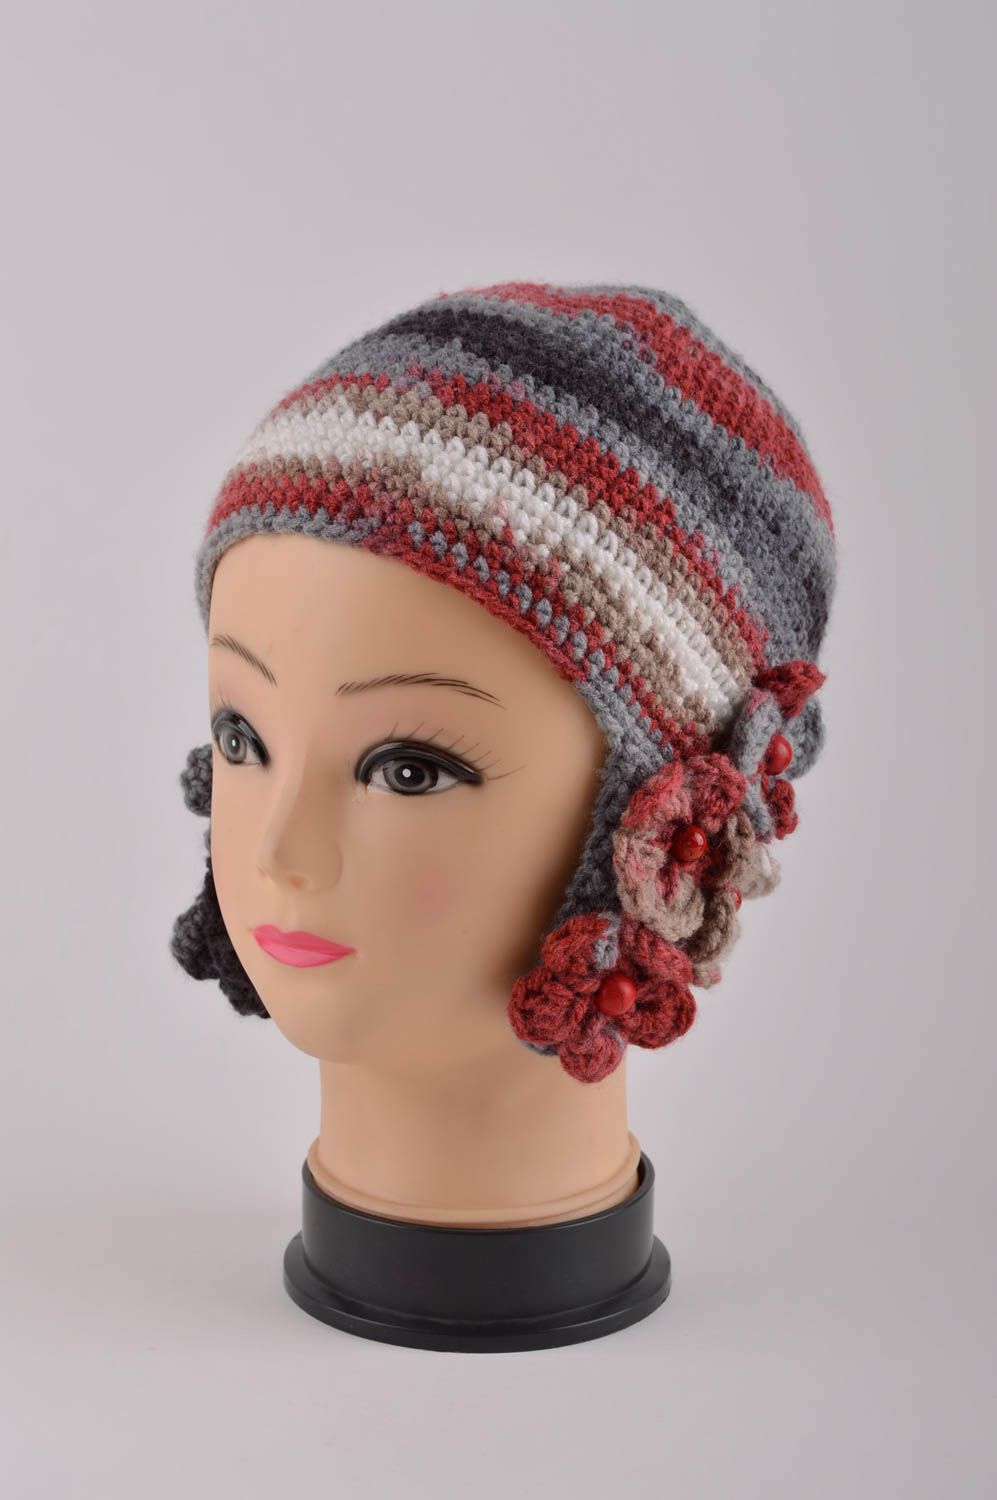 Handmade winter hat crochet hat ladies winter hats designer accessories photo 2